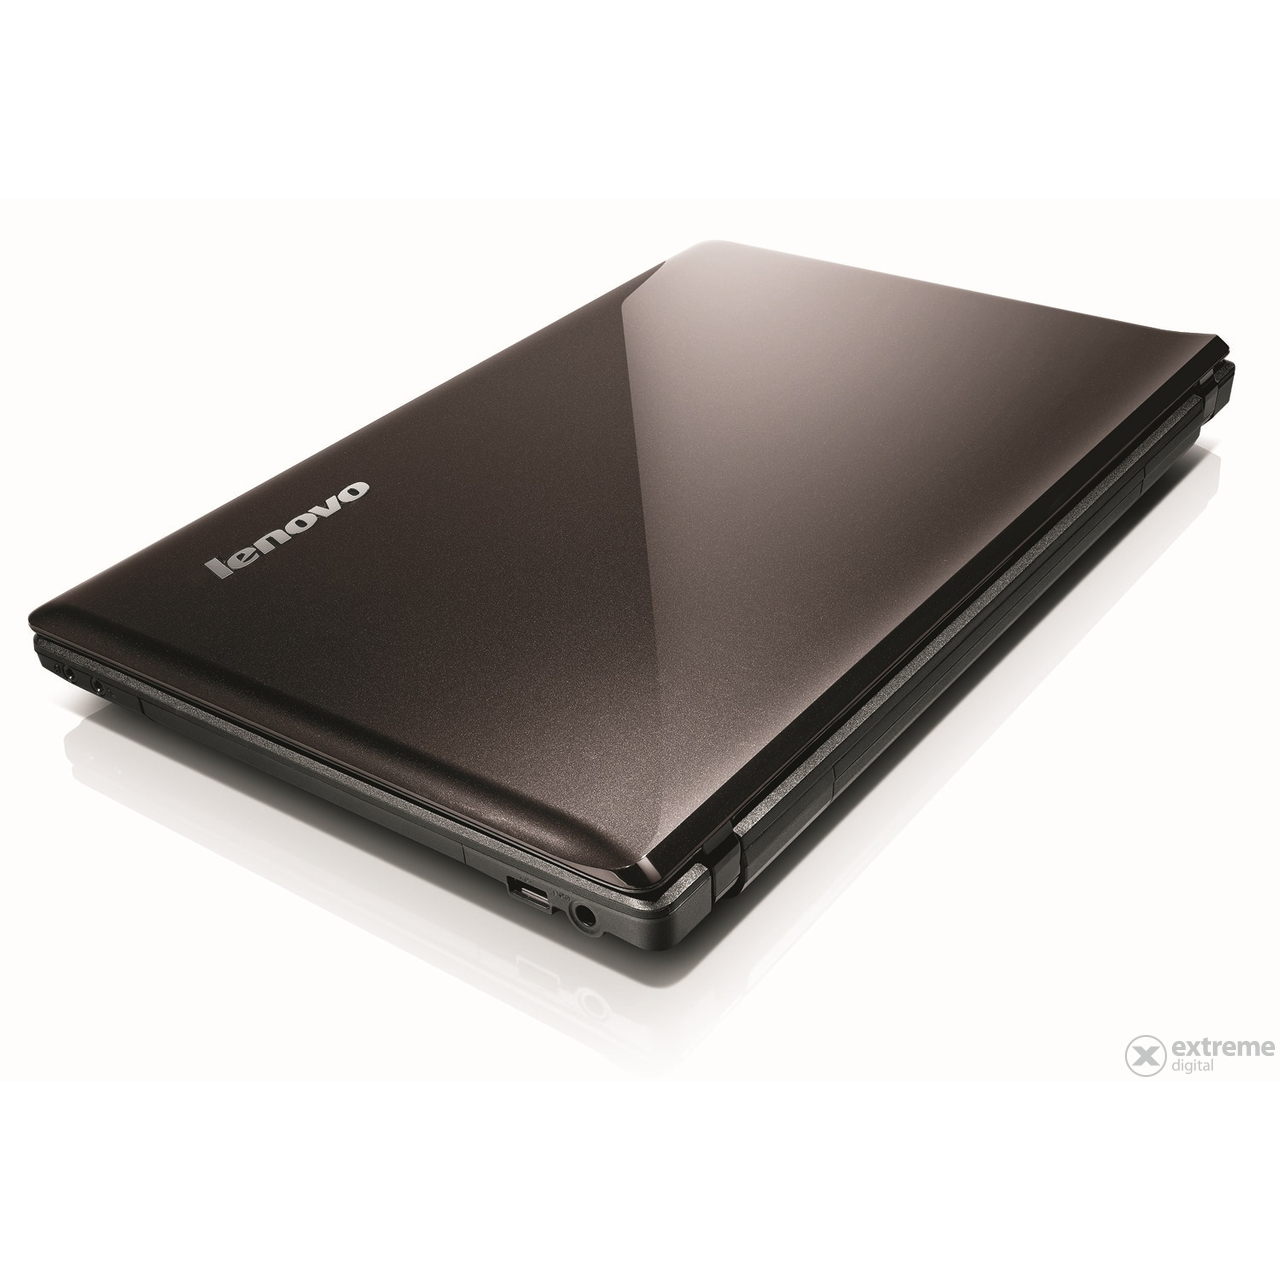 Lenovo Ideapad G770AH 59-324744 notebook